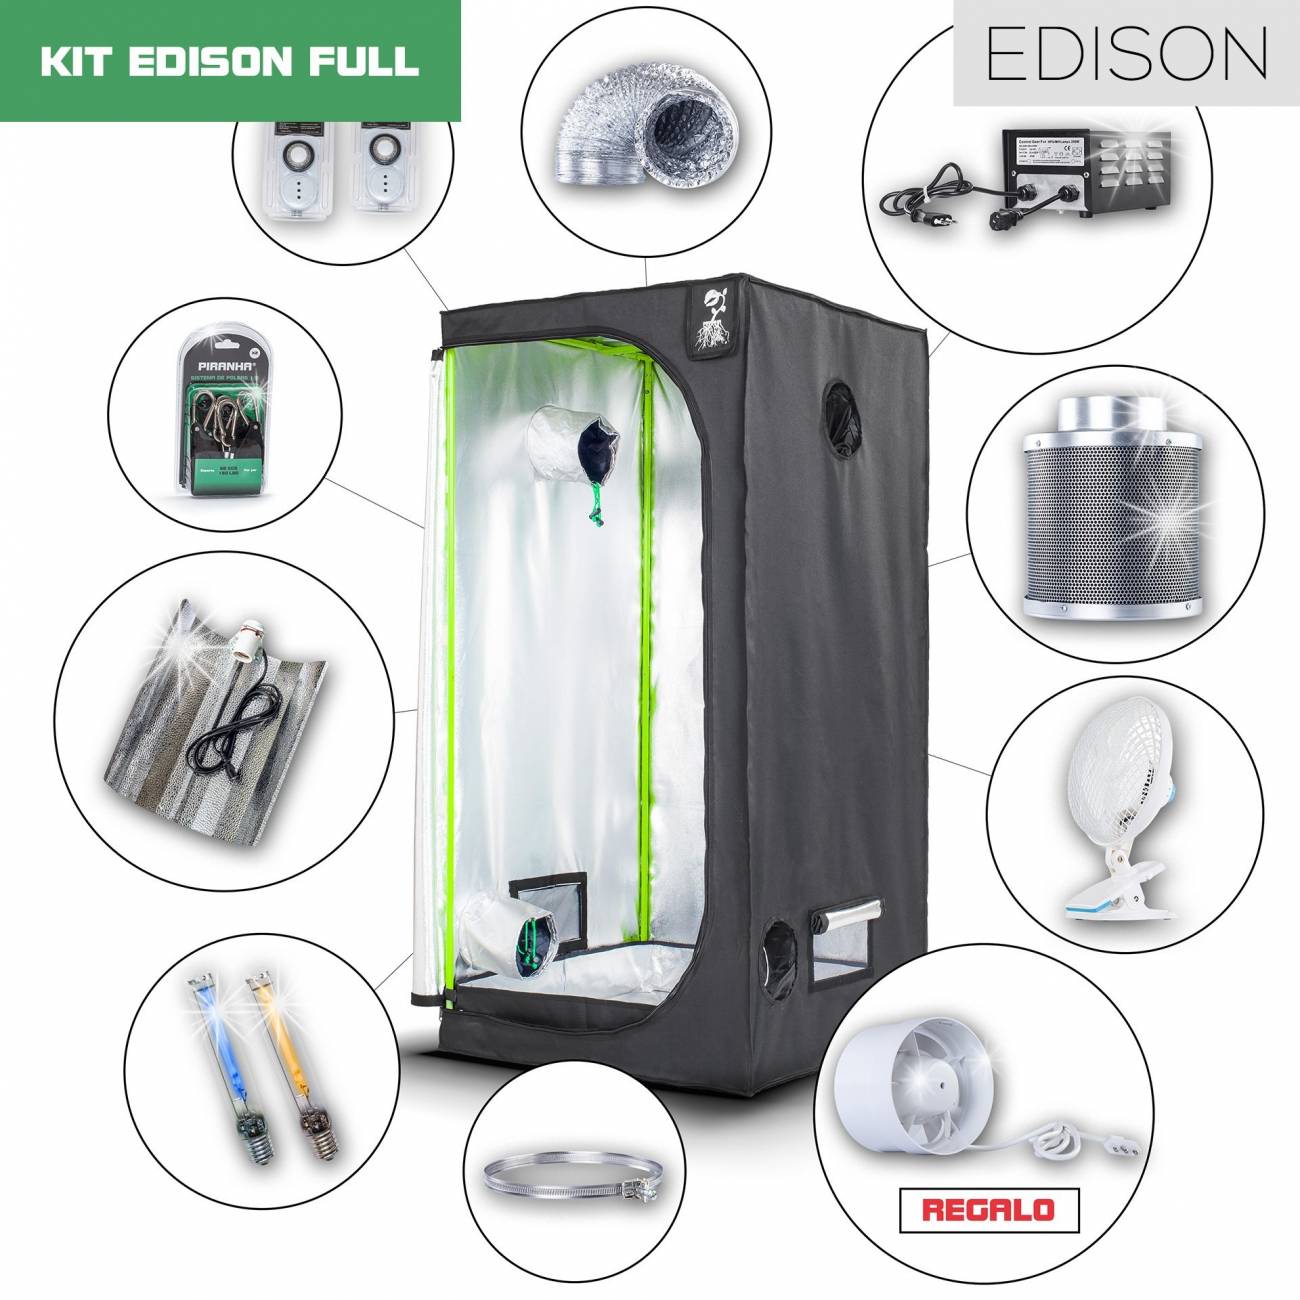 Kit Edison 80 - 250W Completo